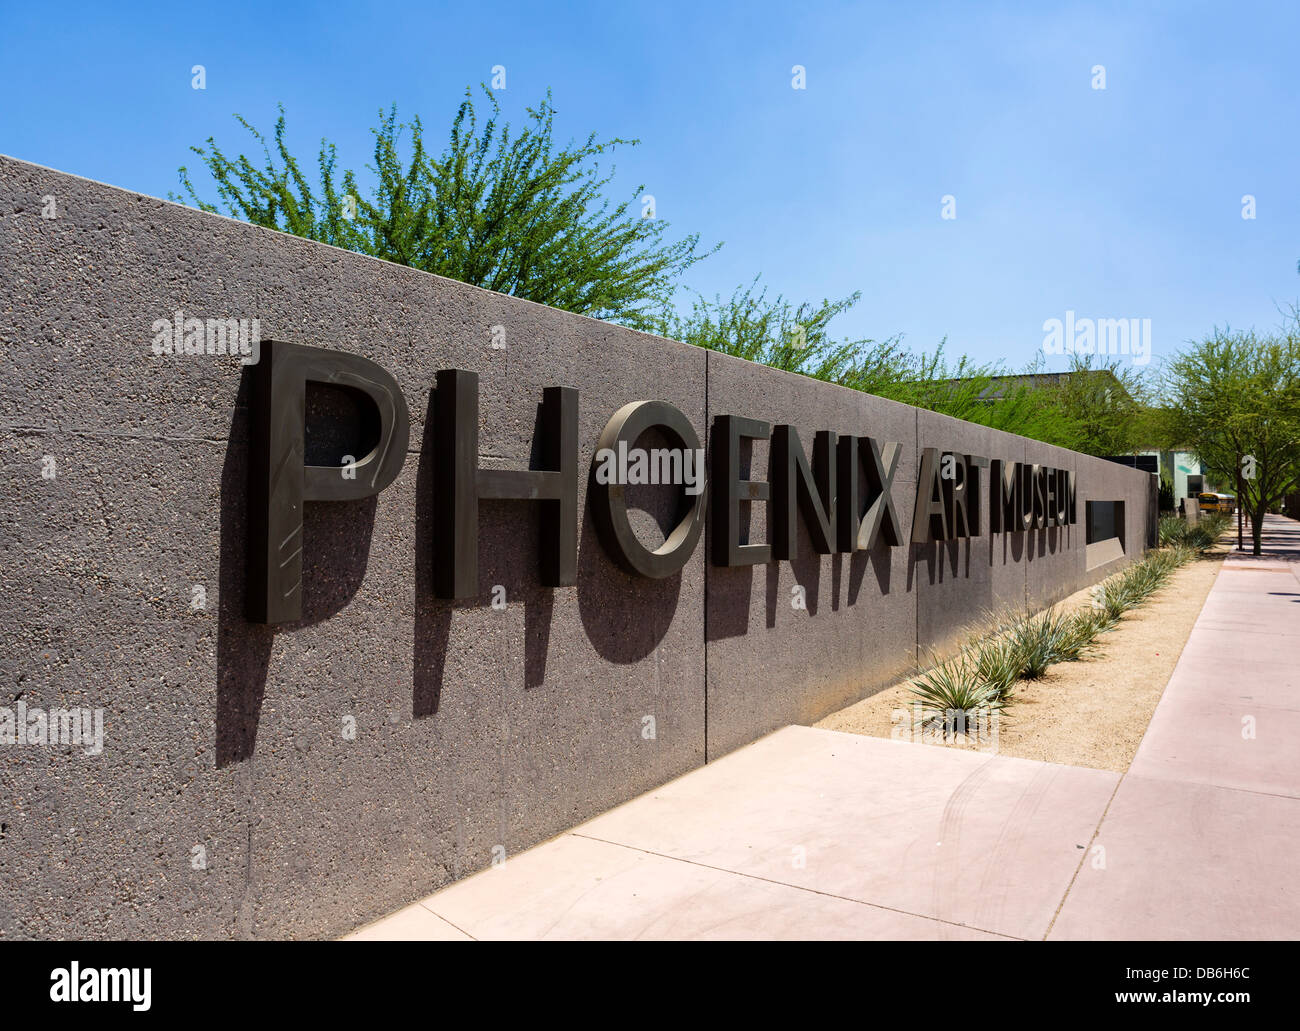 Entrance to the Phoenix Art Museum, Phoenix, Arizona, USA Stock Photo